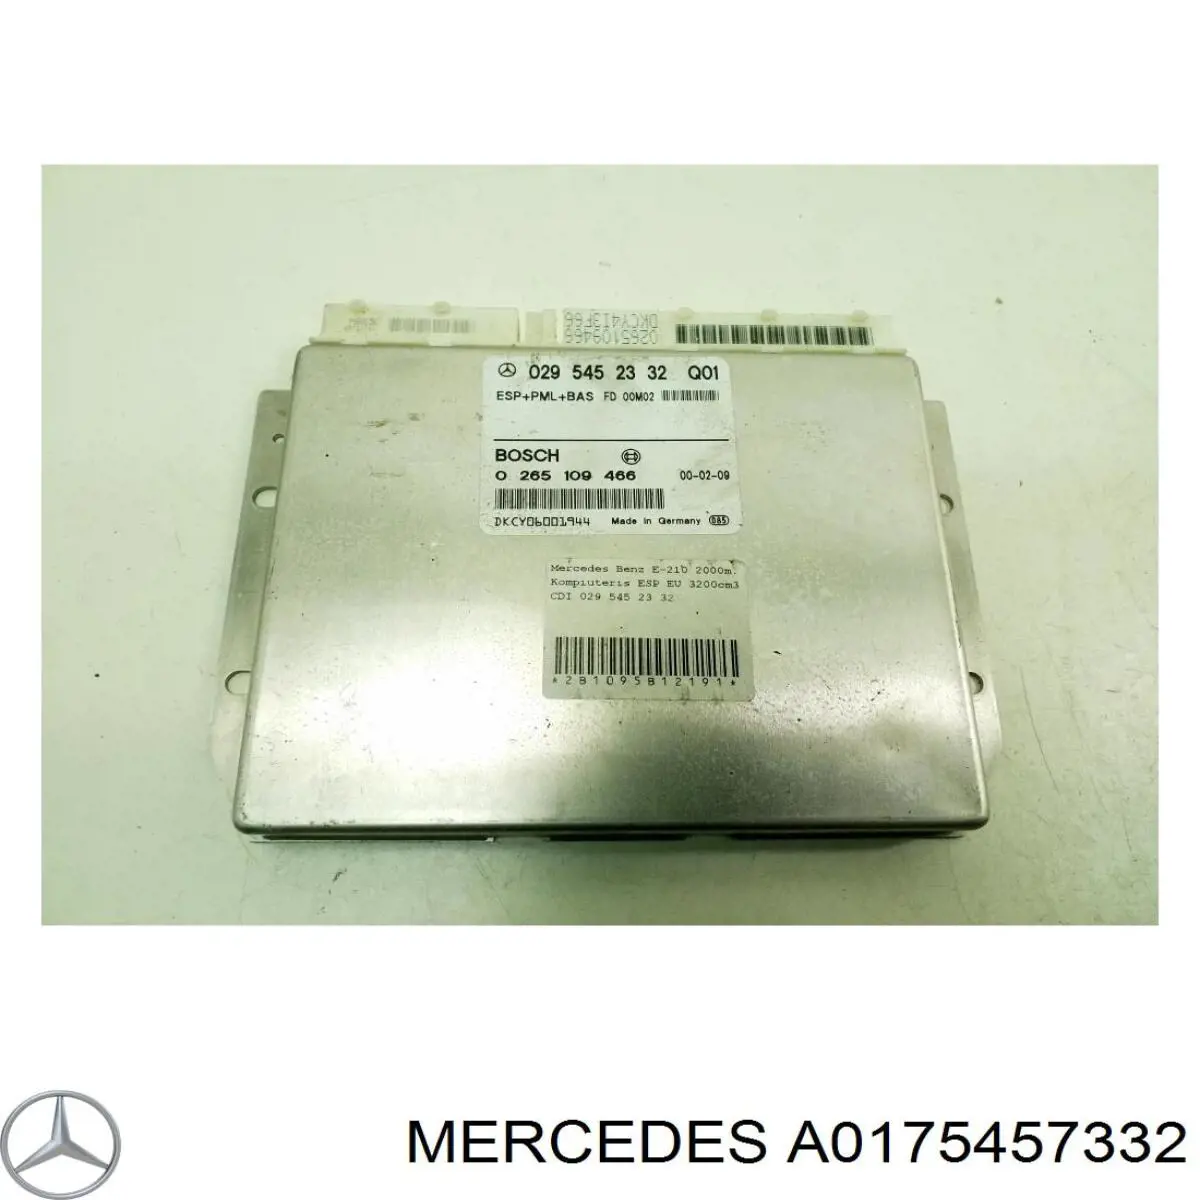 175457332 Mercedes unidad de control, asr